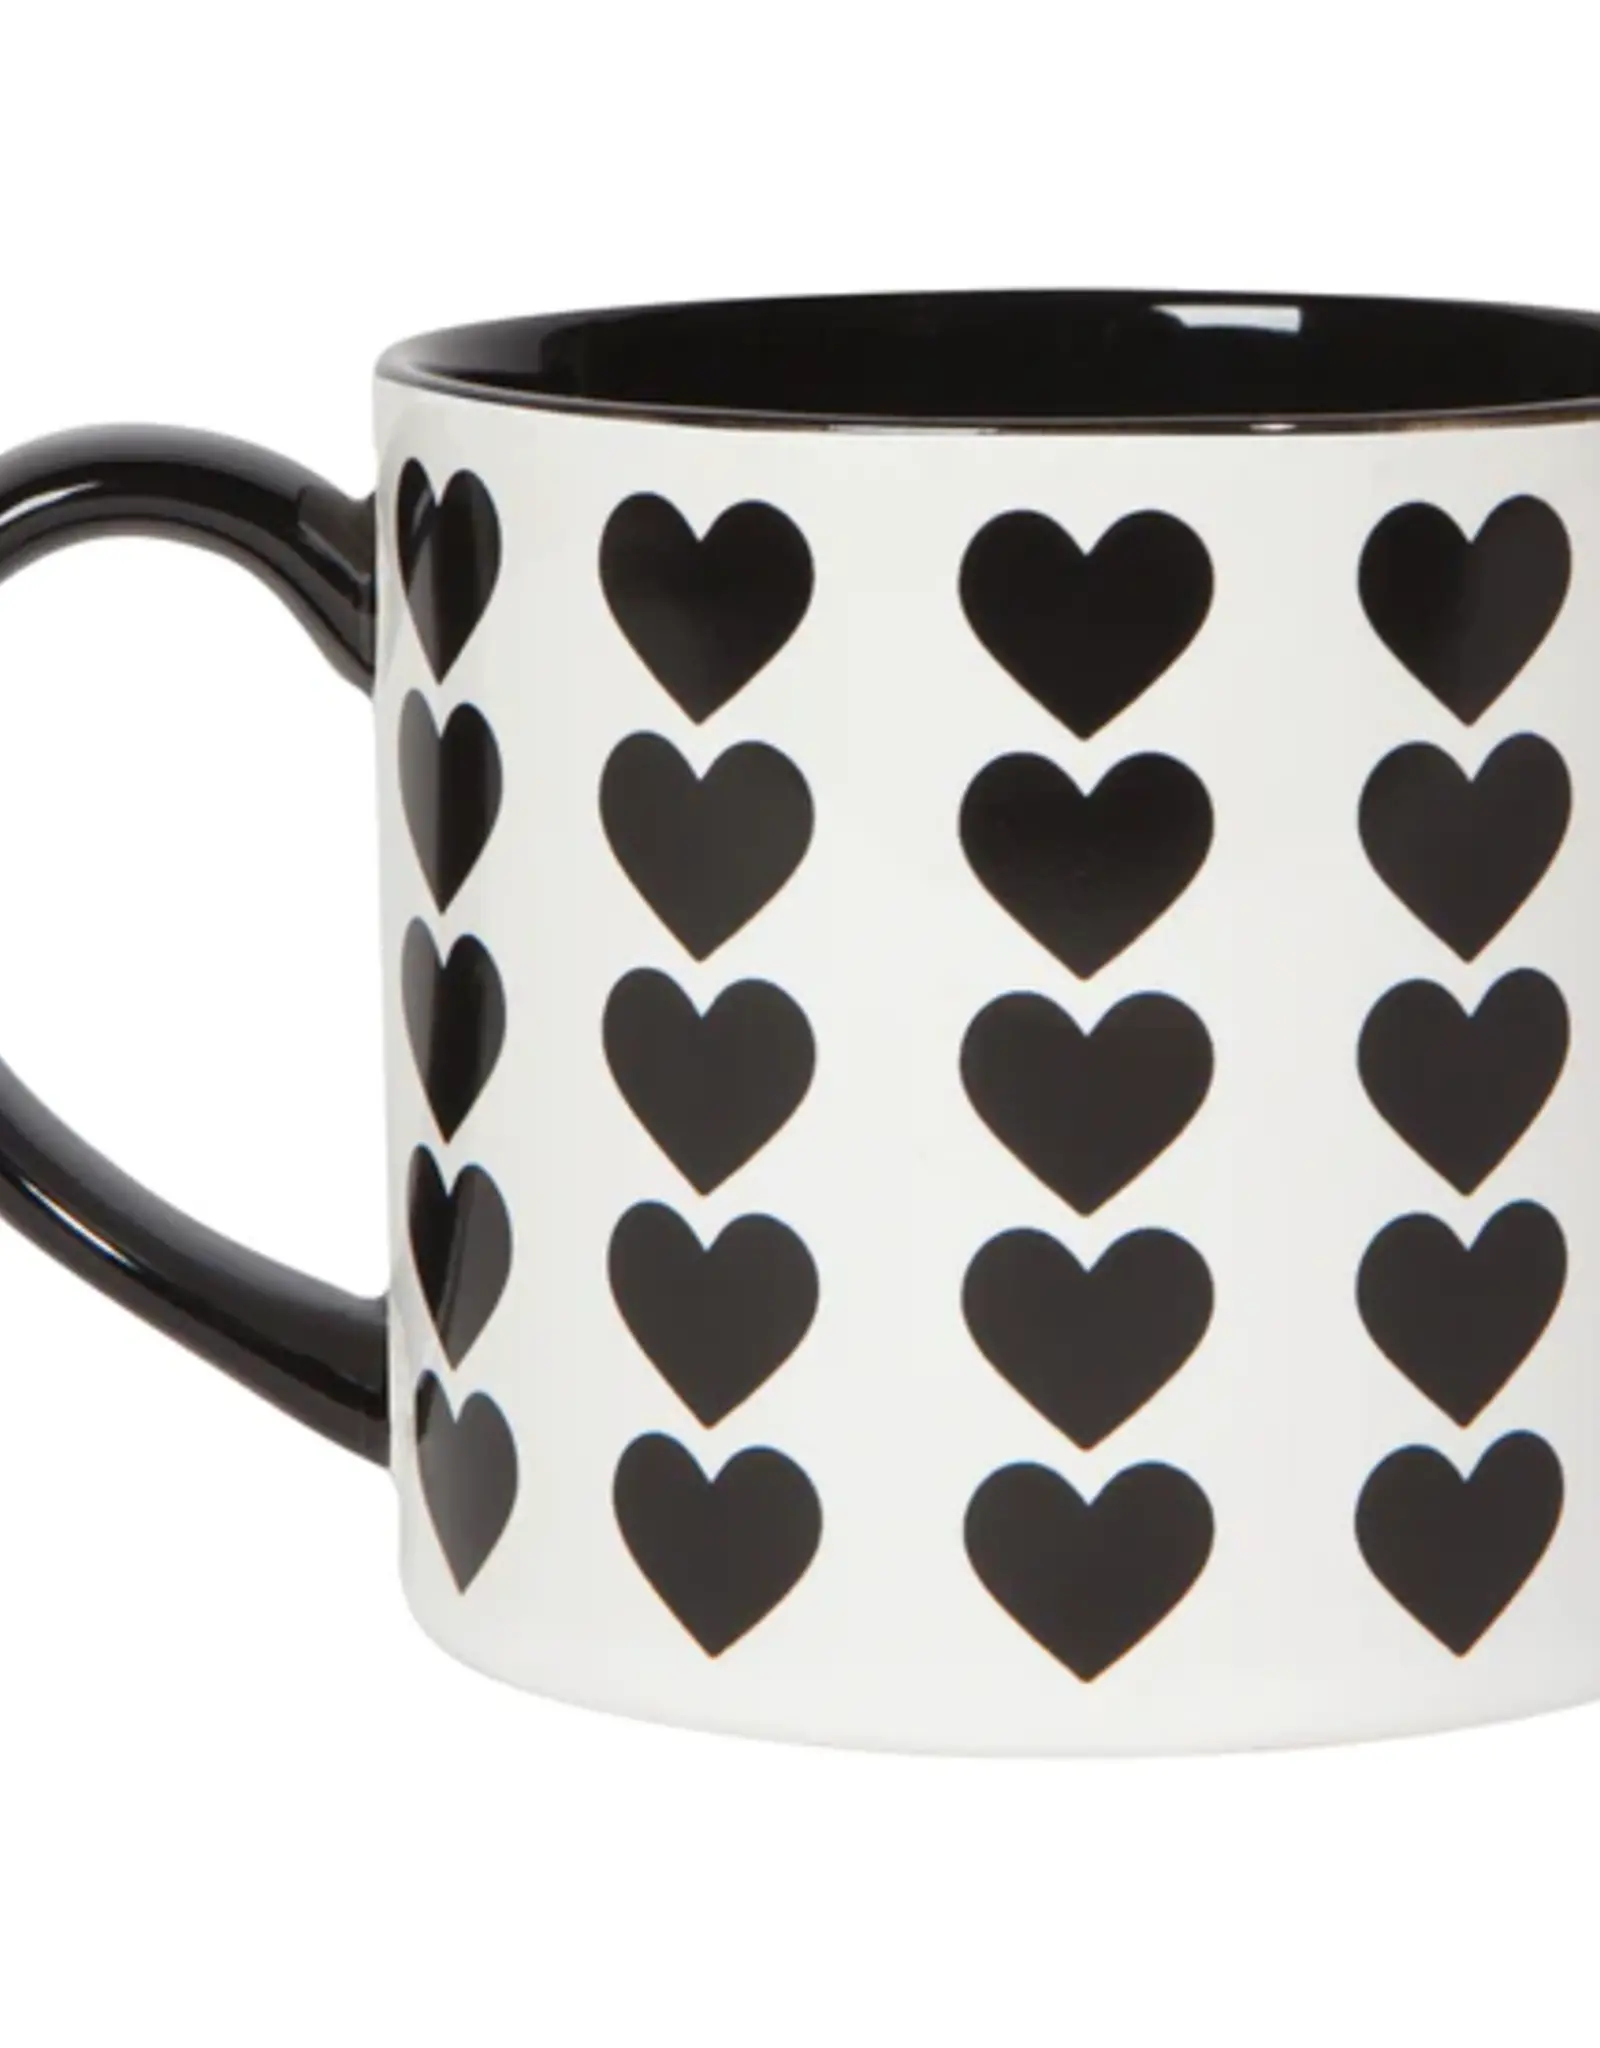 Danica + Now Designs Mug - Black Hearts (boxed)